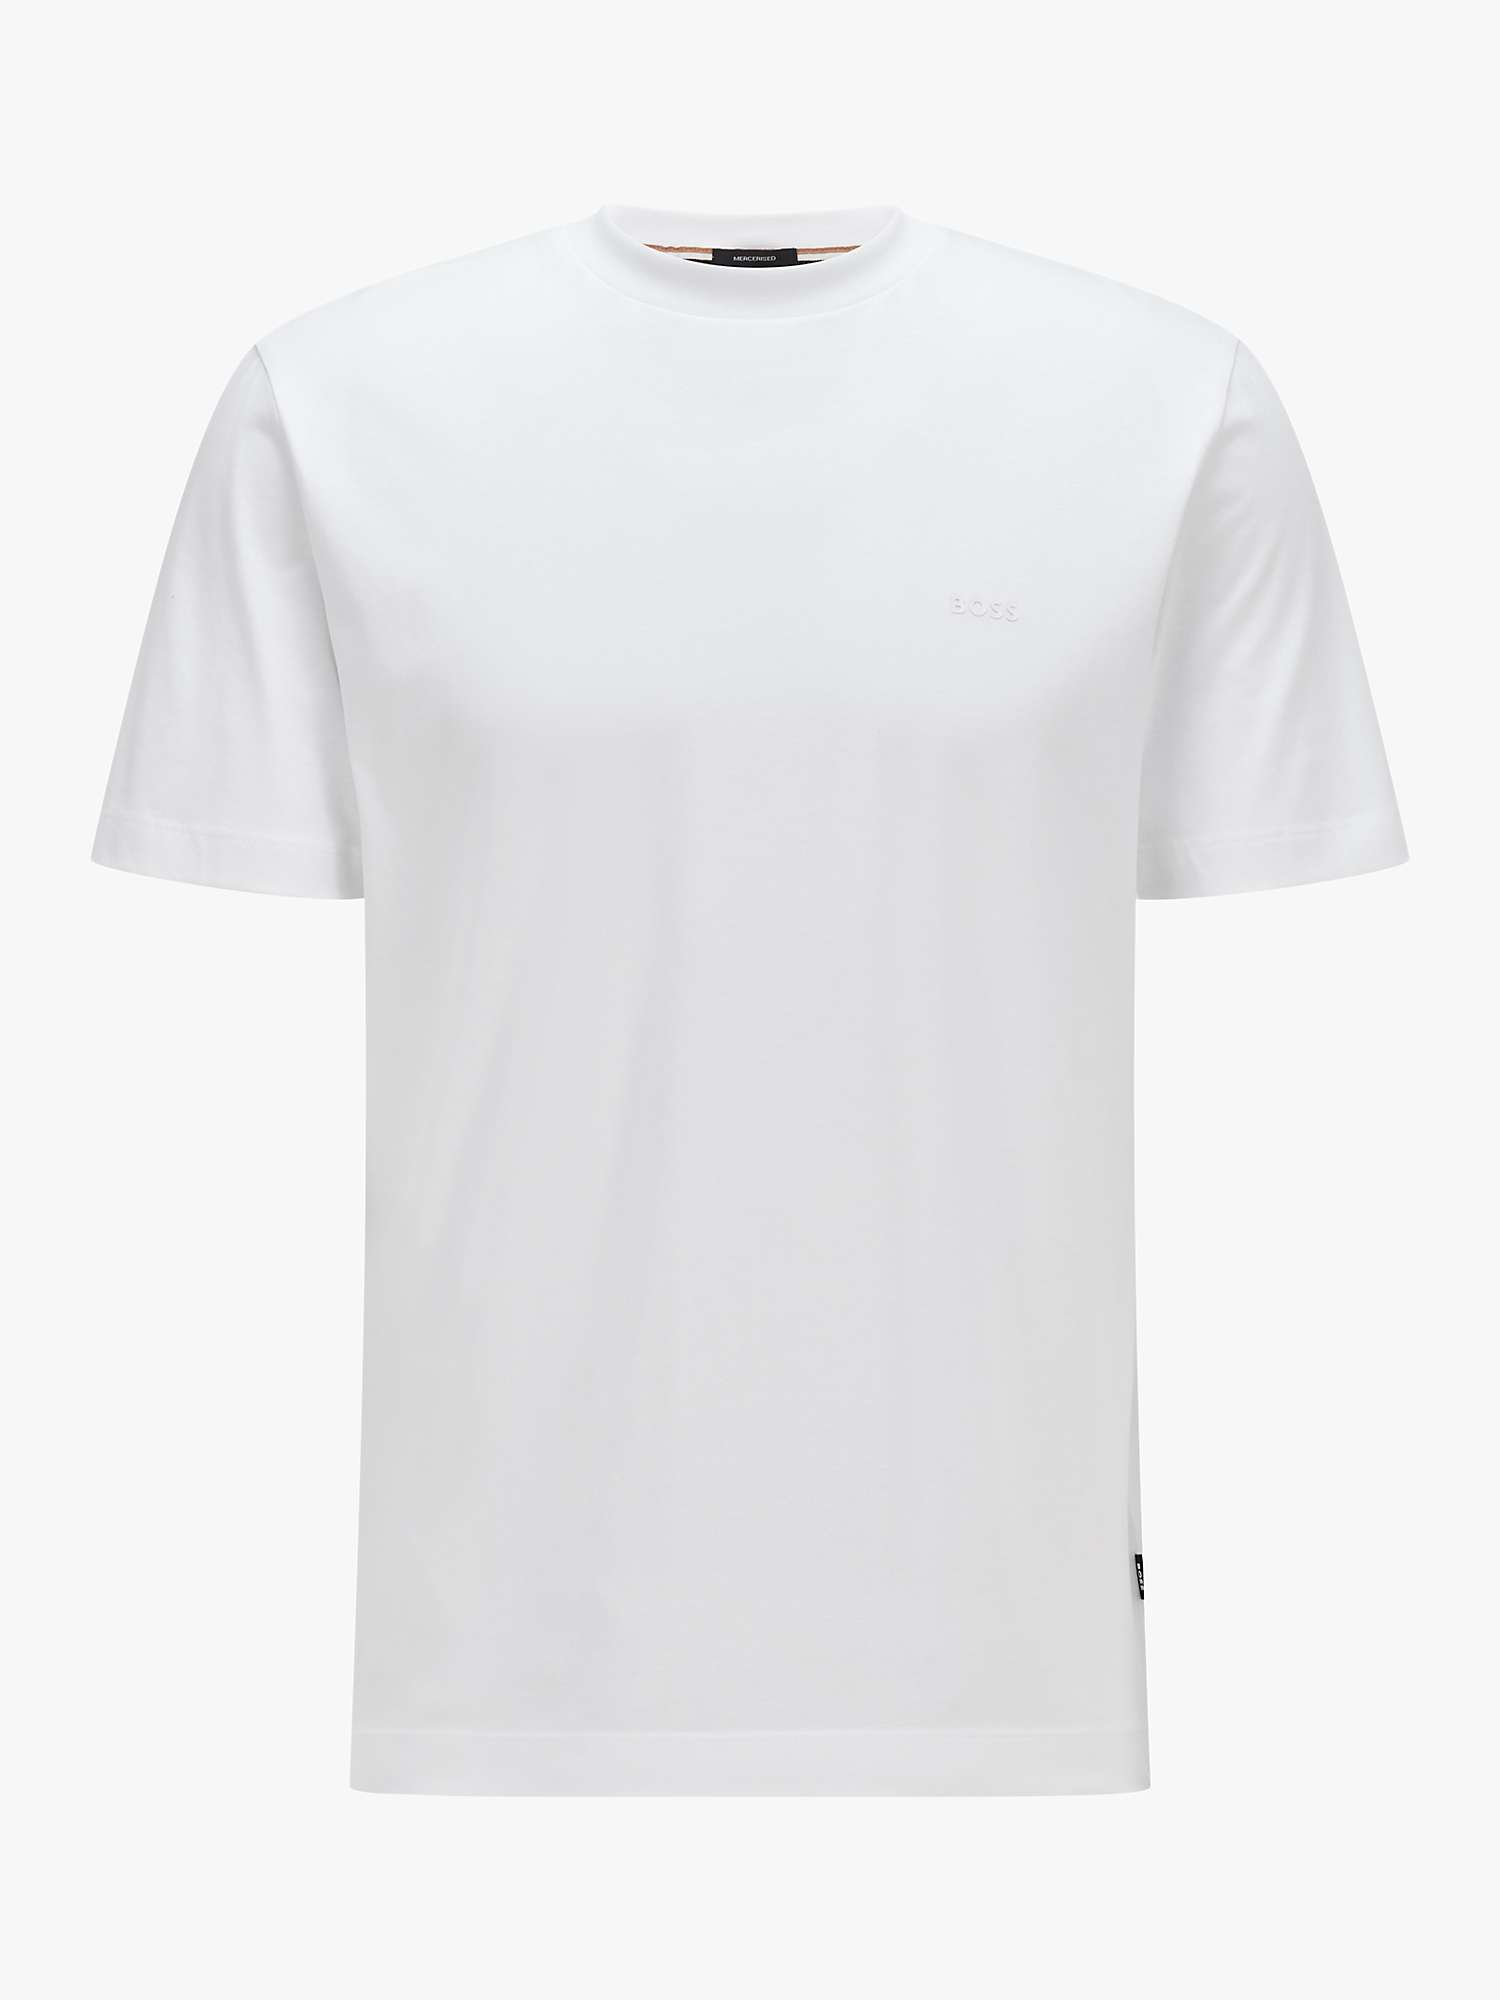 BOSS Thompson 01 T-Shirt, White at John Lewis & Partners